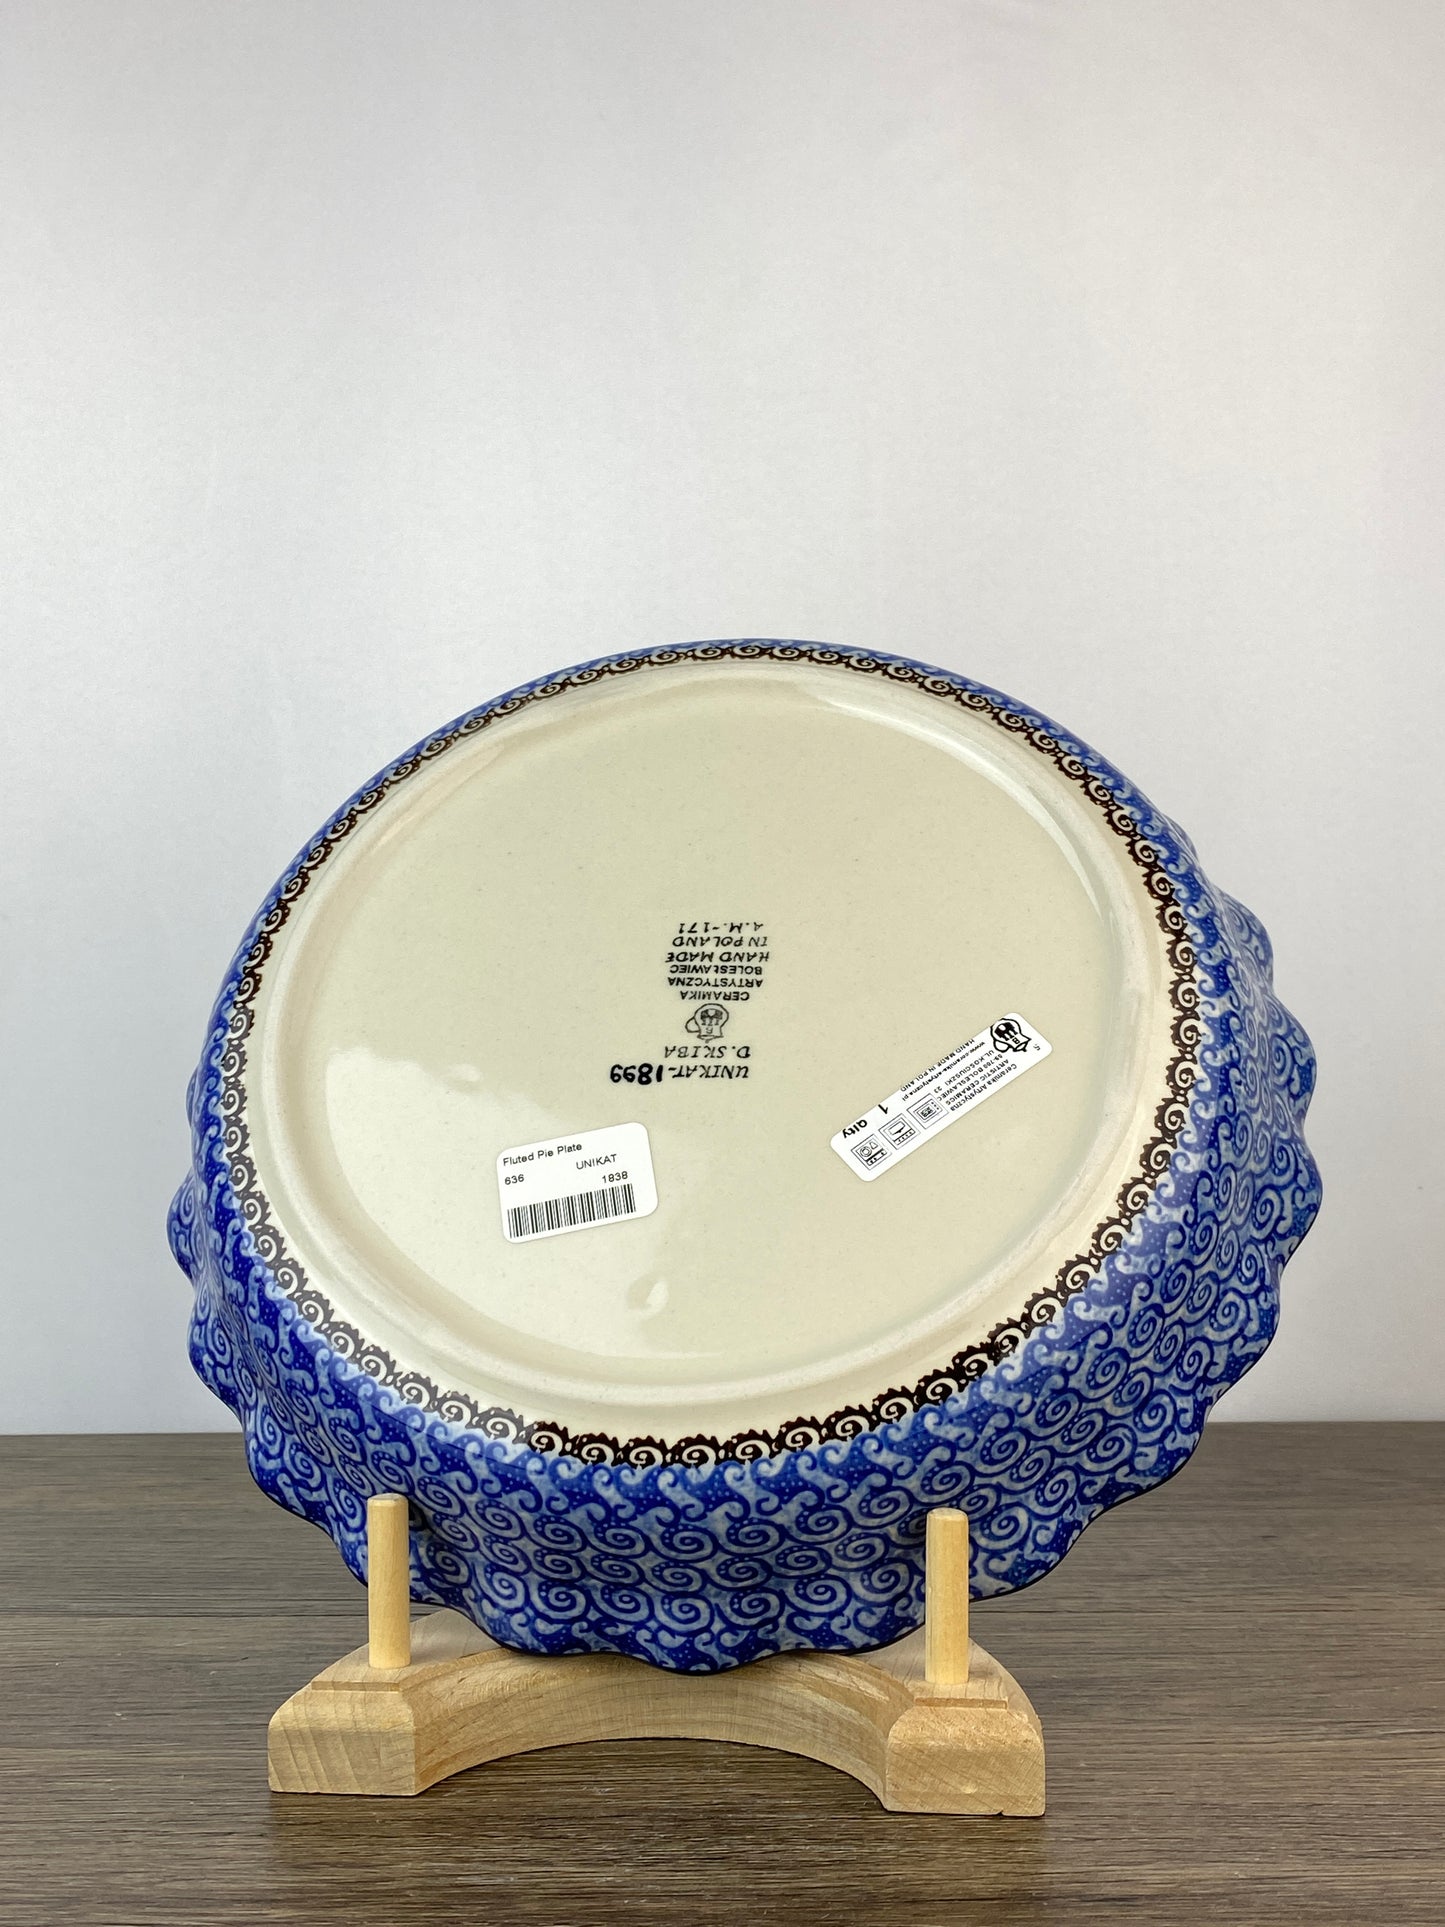 SALE Ruffled Unikat Pie Plate / Round Baker - Shape 636 Pattern U1899